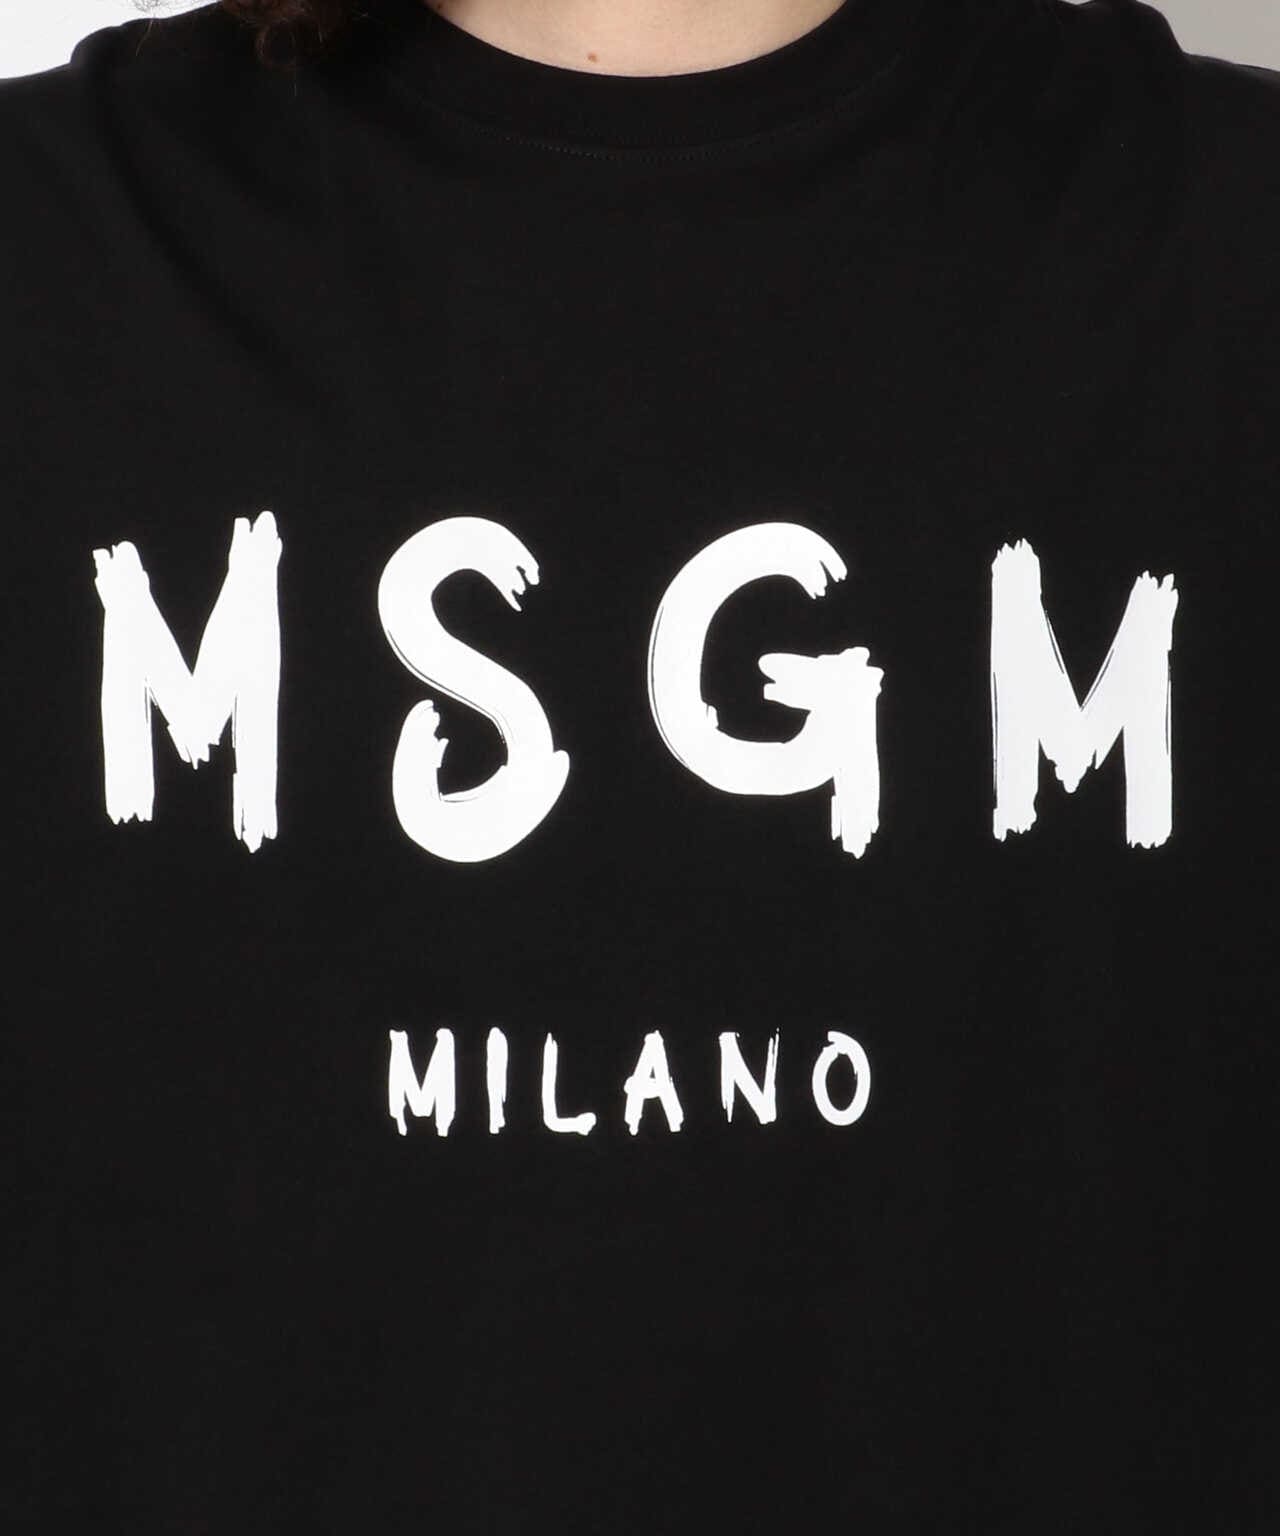 MSGM 定番Tシャツ 人気カラーブラック